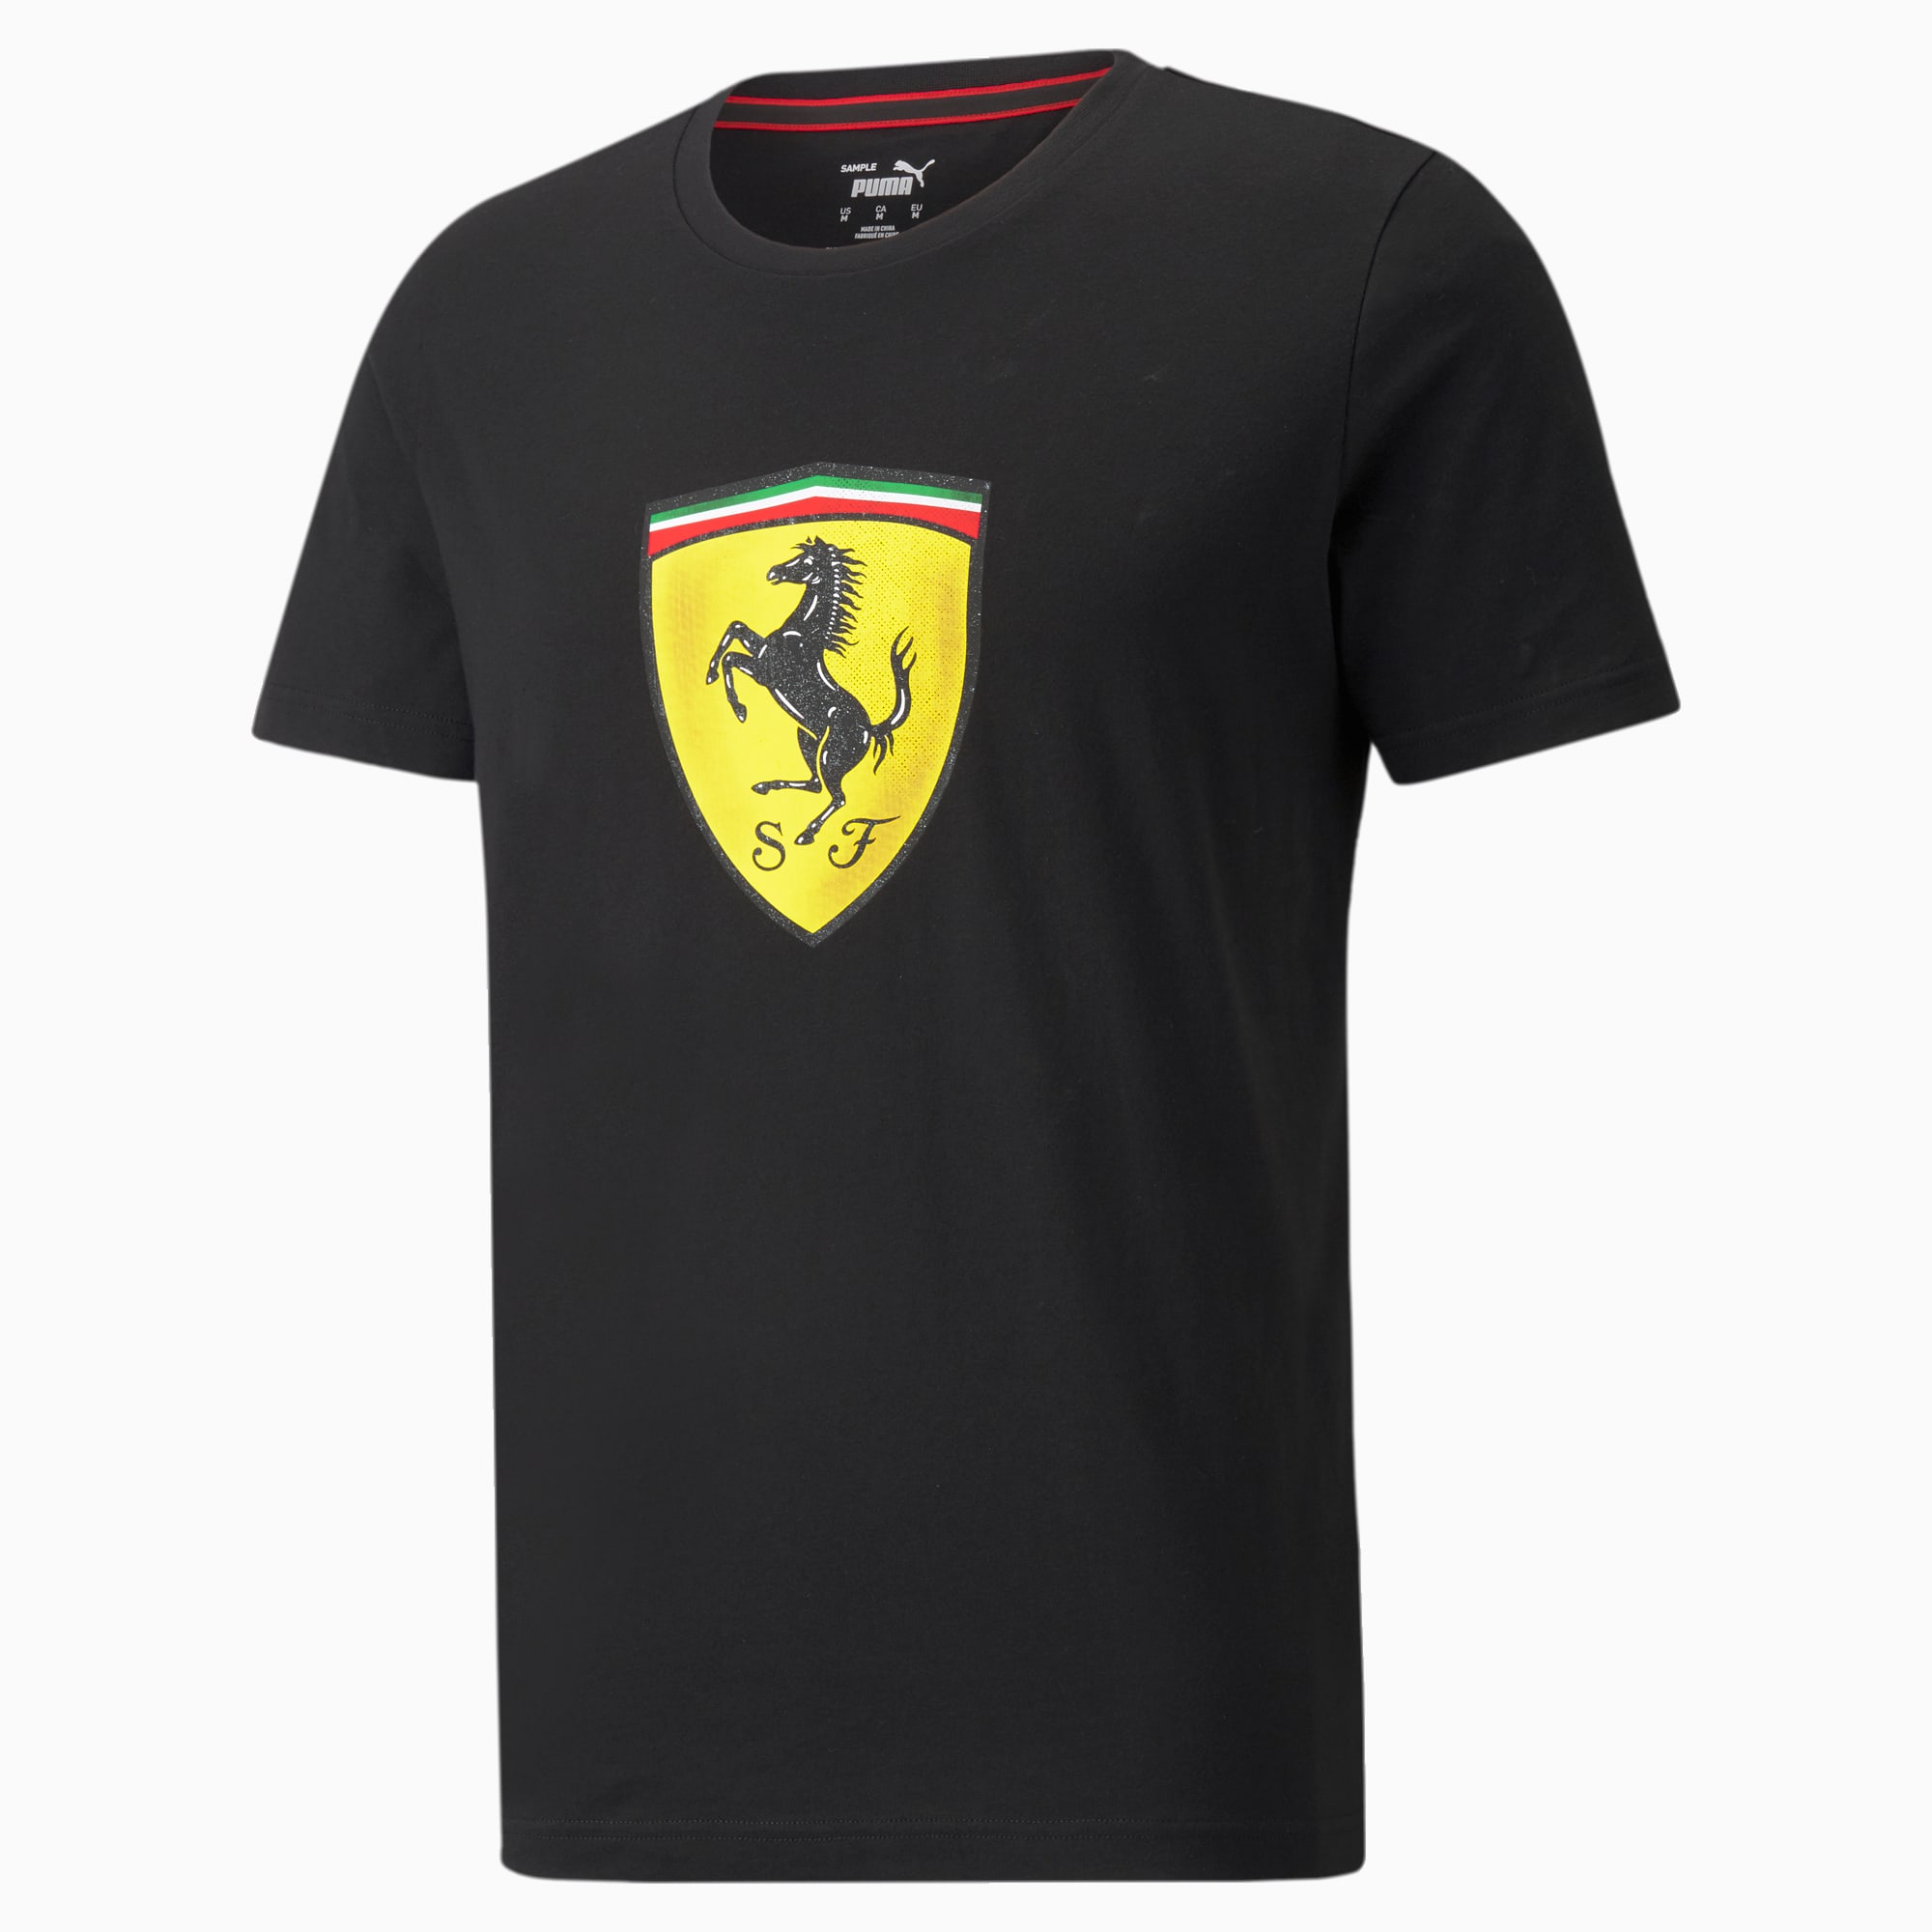 Puma Men's Ferrari Racing Graphic T-Shirt - Tan - M Each